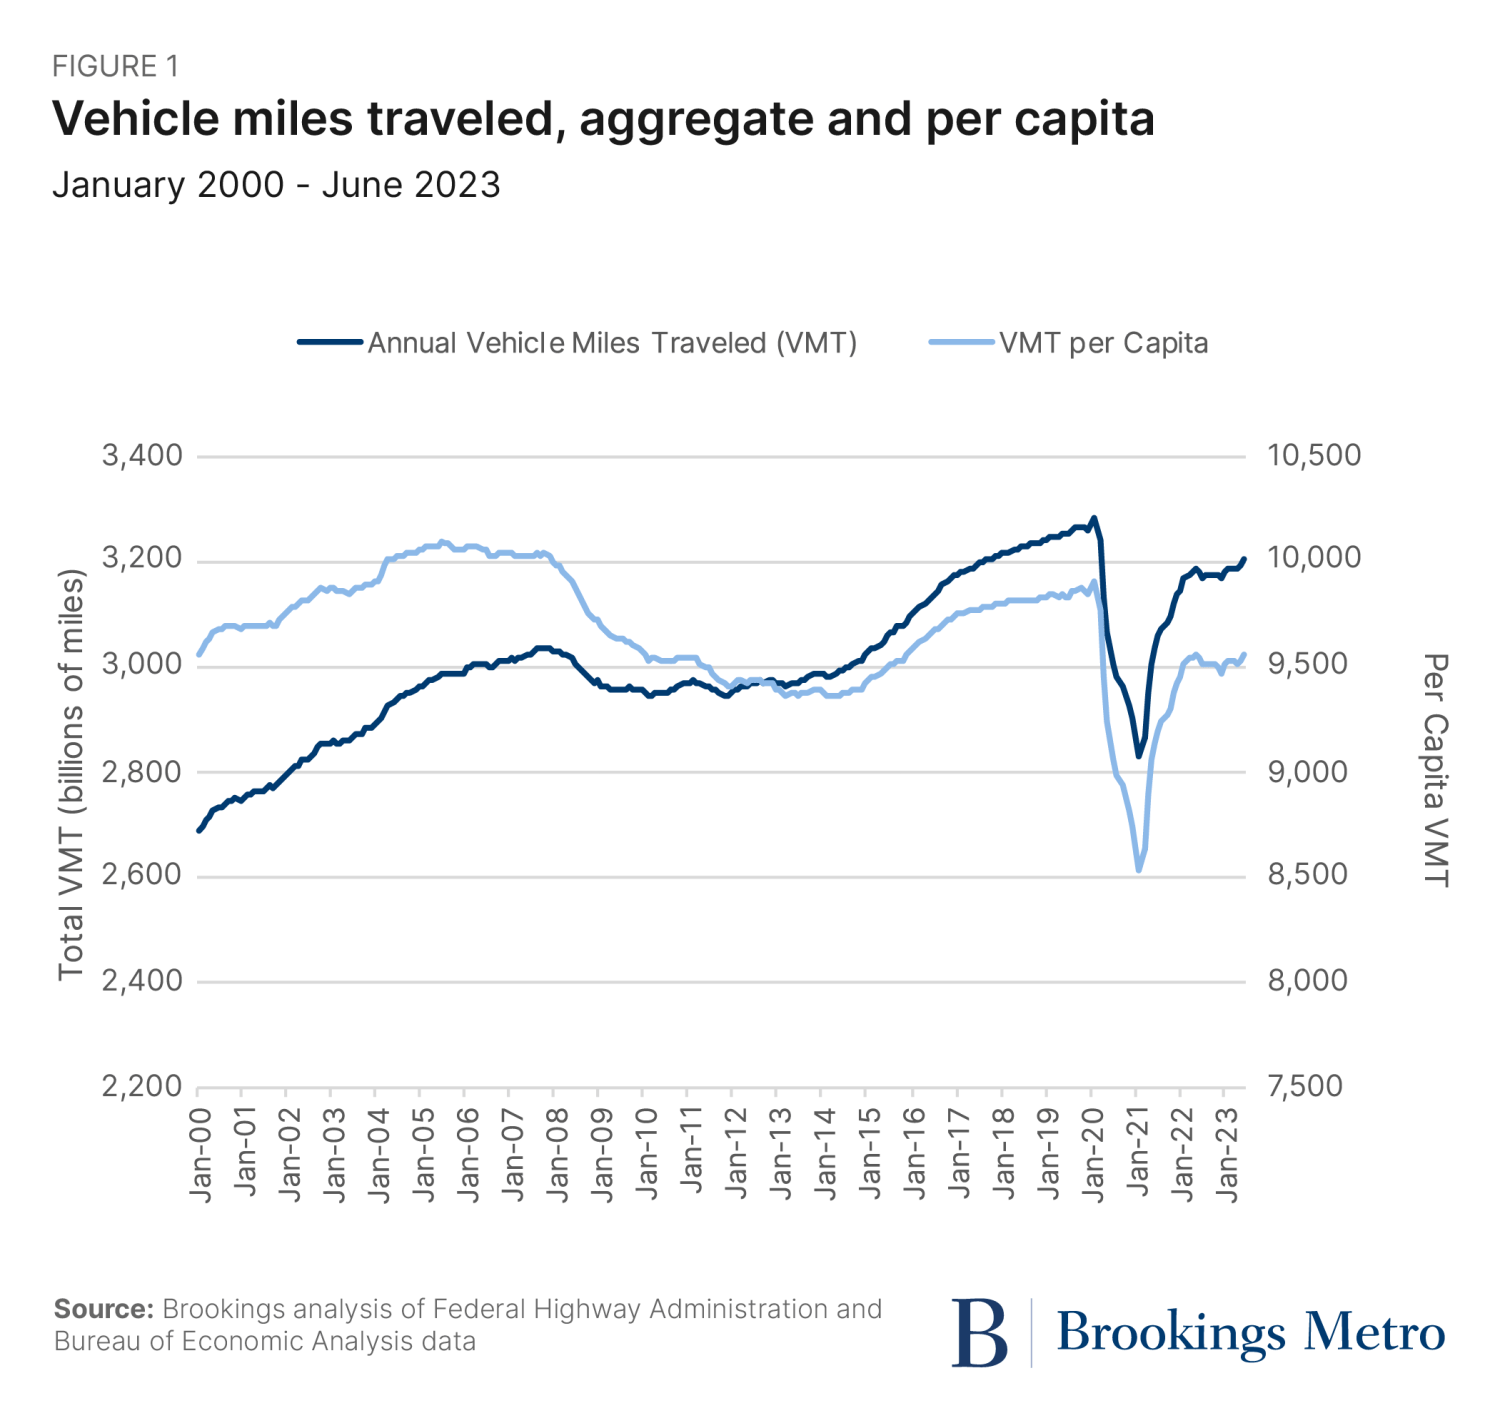 Figure 1: Vehicle miles traveled, aggregate and per capita. January 2000-June 2023